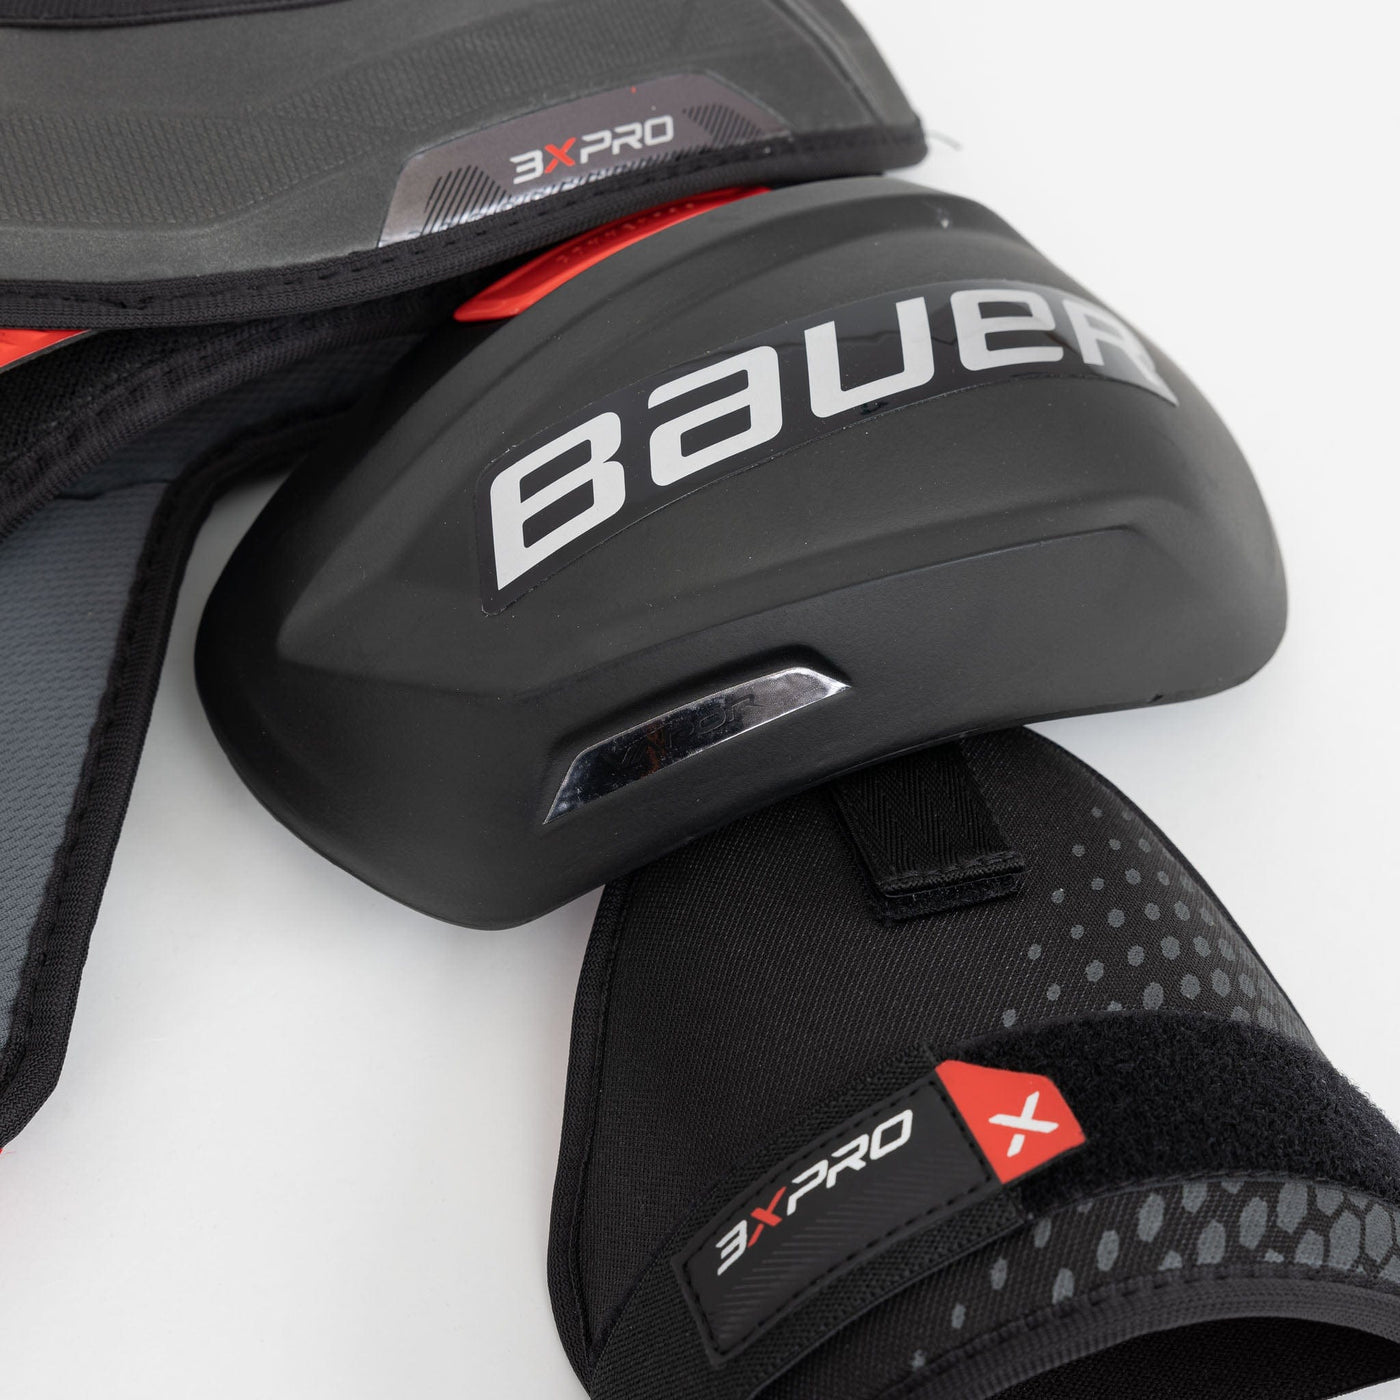 Bauer Vapor 3X Pro Senior Hockey Shoulder Pads - The Hockey Shop Source For Sports